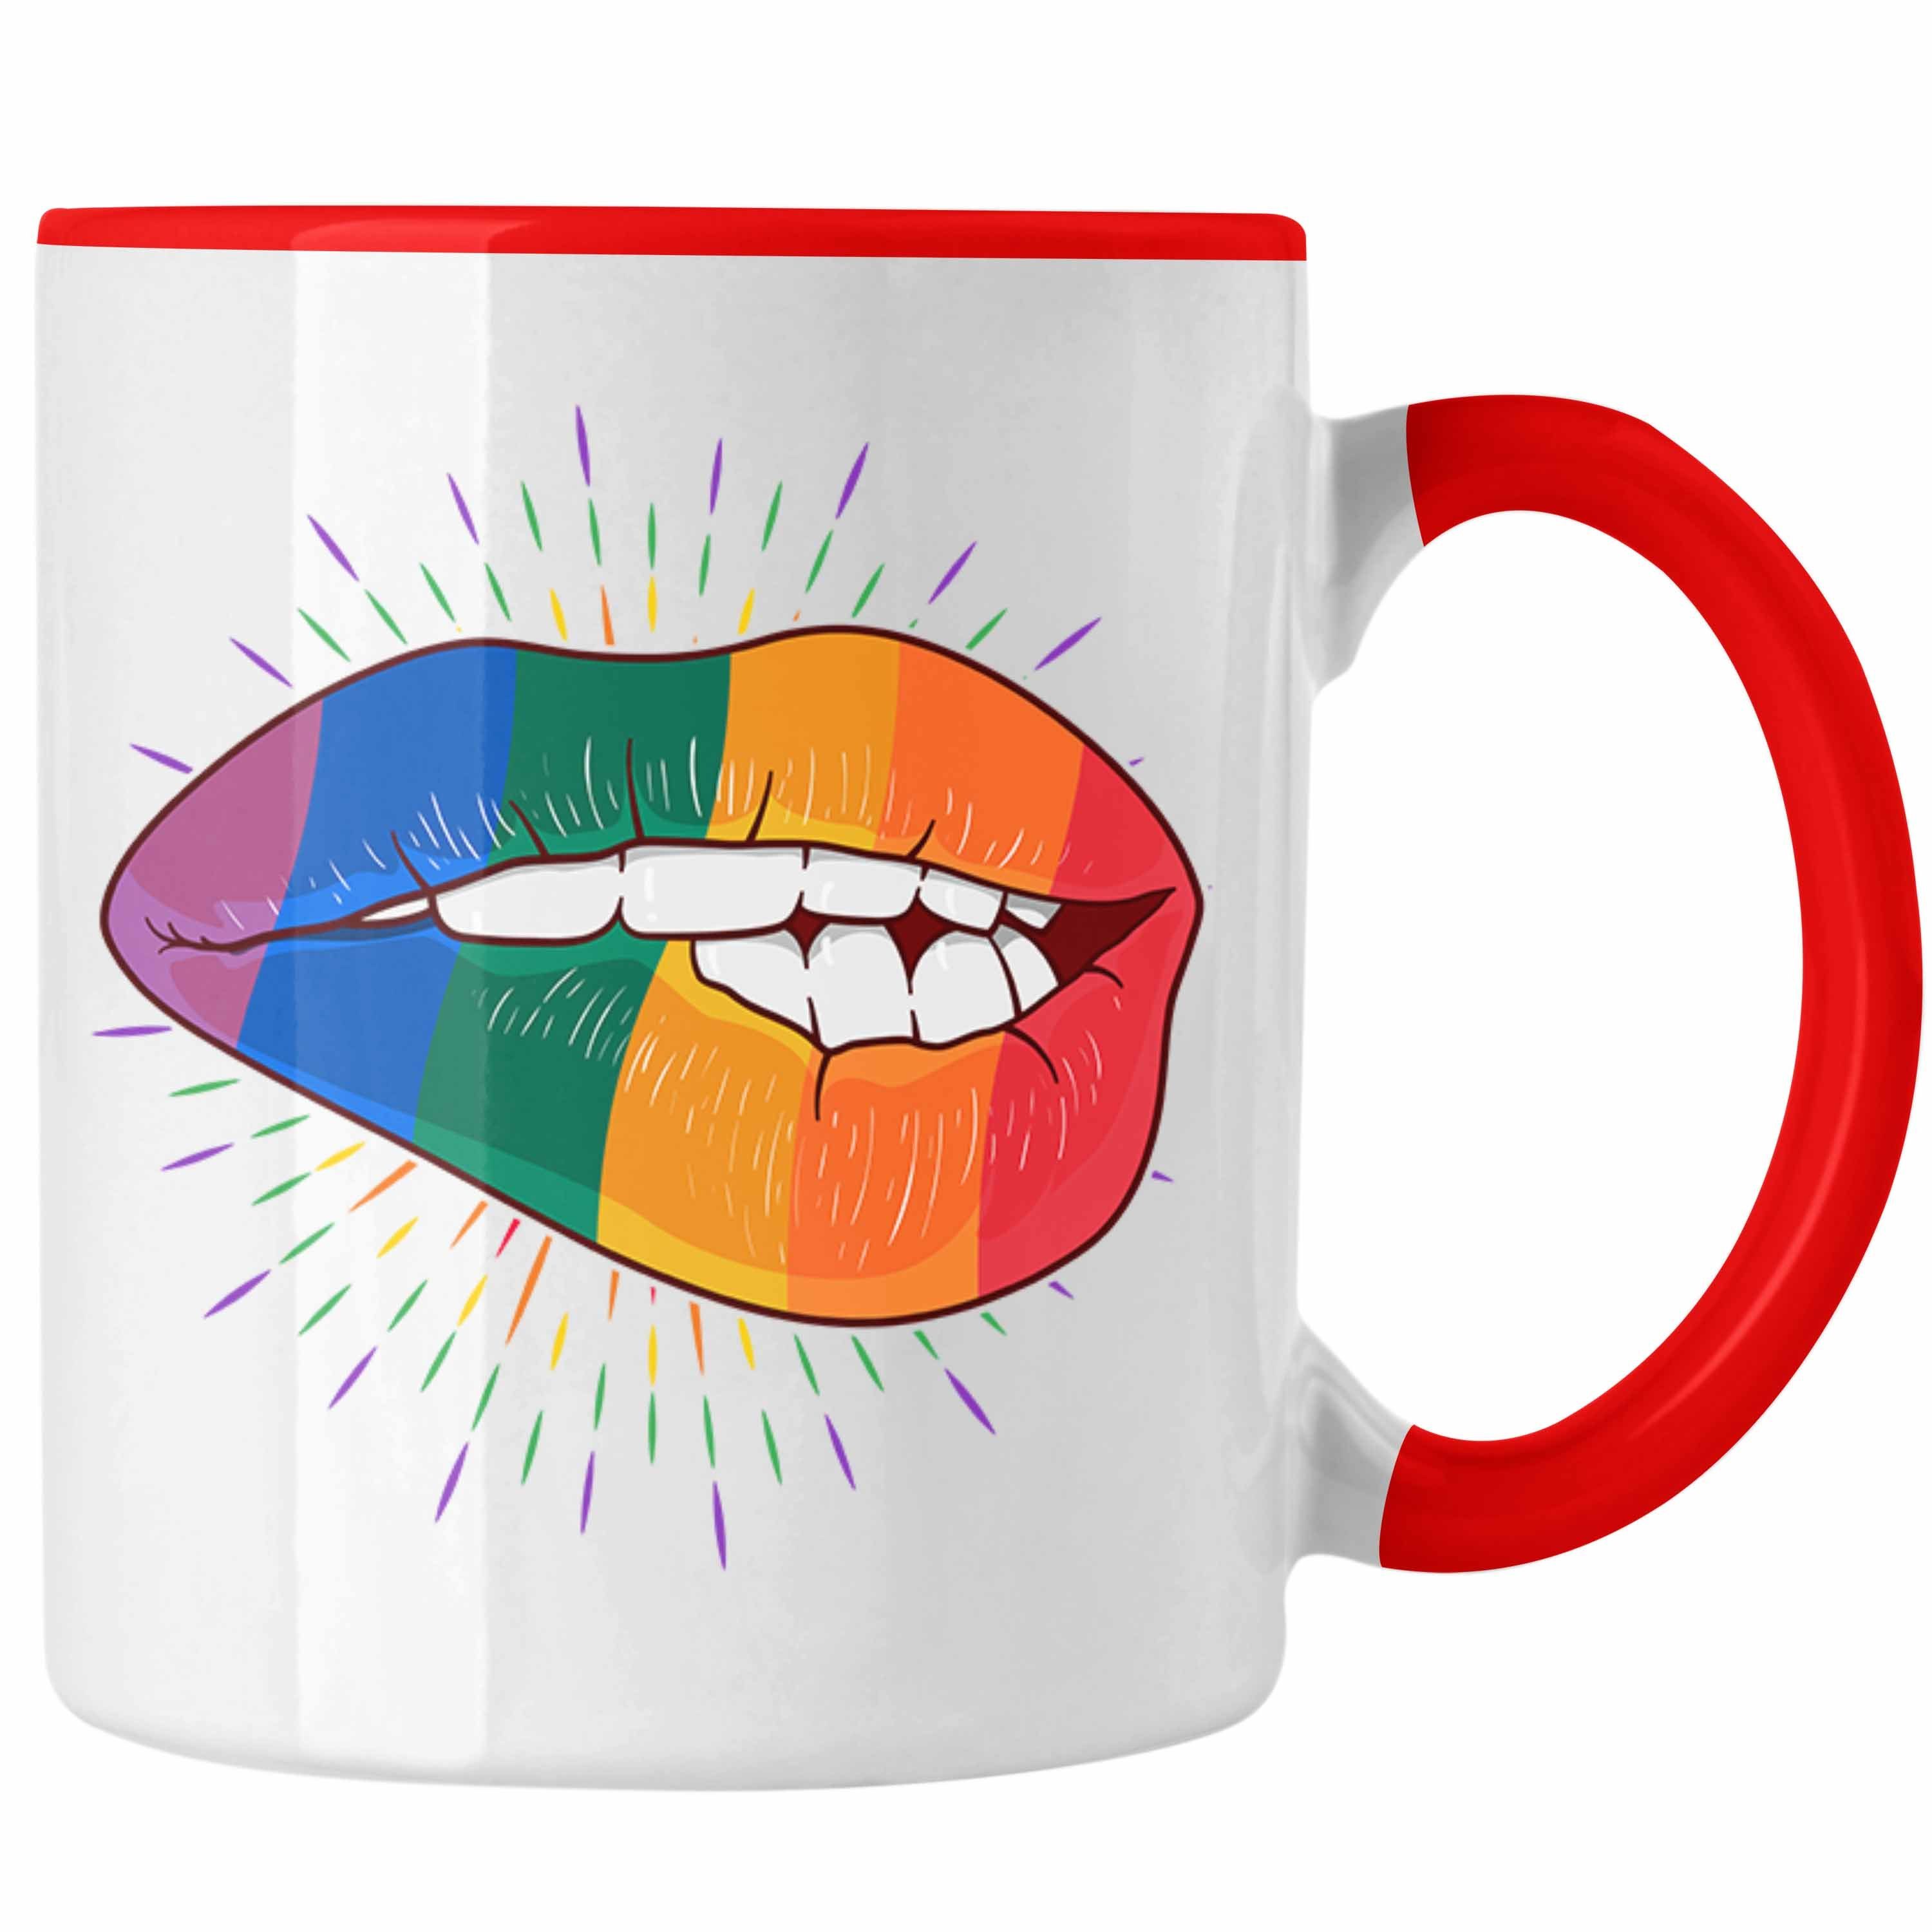 Trendation Tasse Trendation - LGBT Tasse Geschenk für Schwule Lesben Transgender Regenbogen Lustige Grafik Regenbogen Bunte Lippe Rot